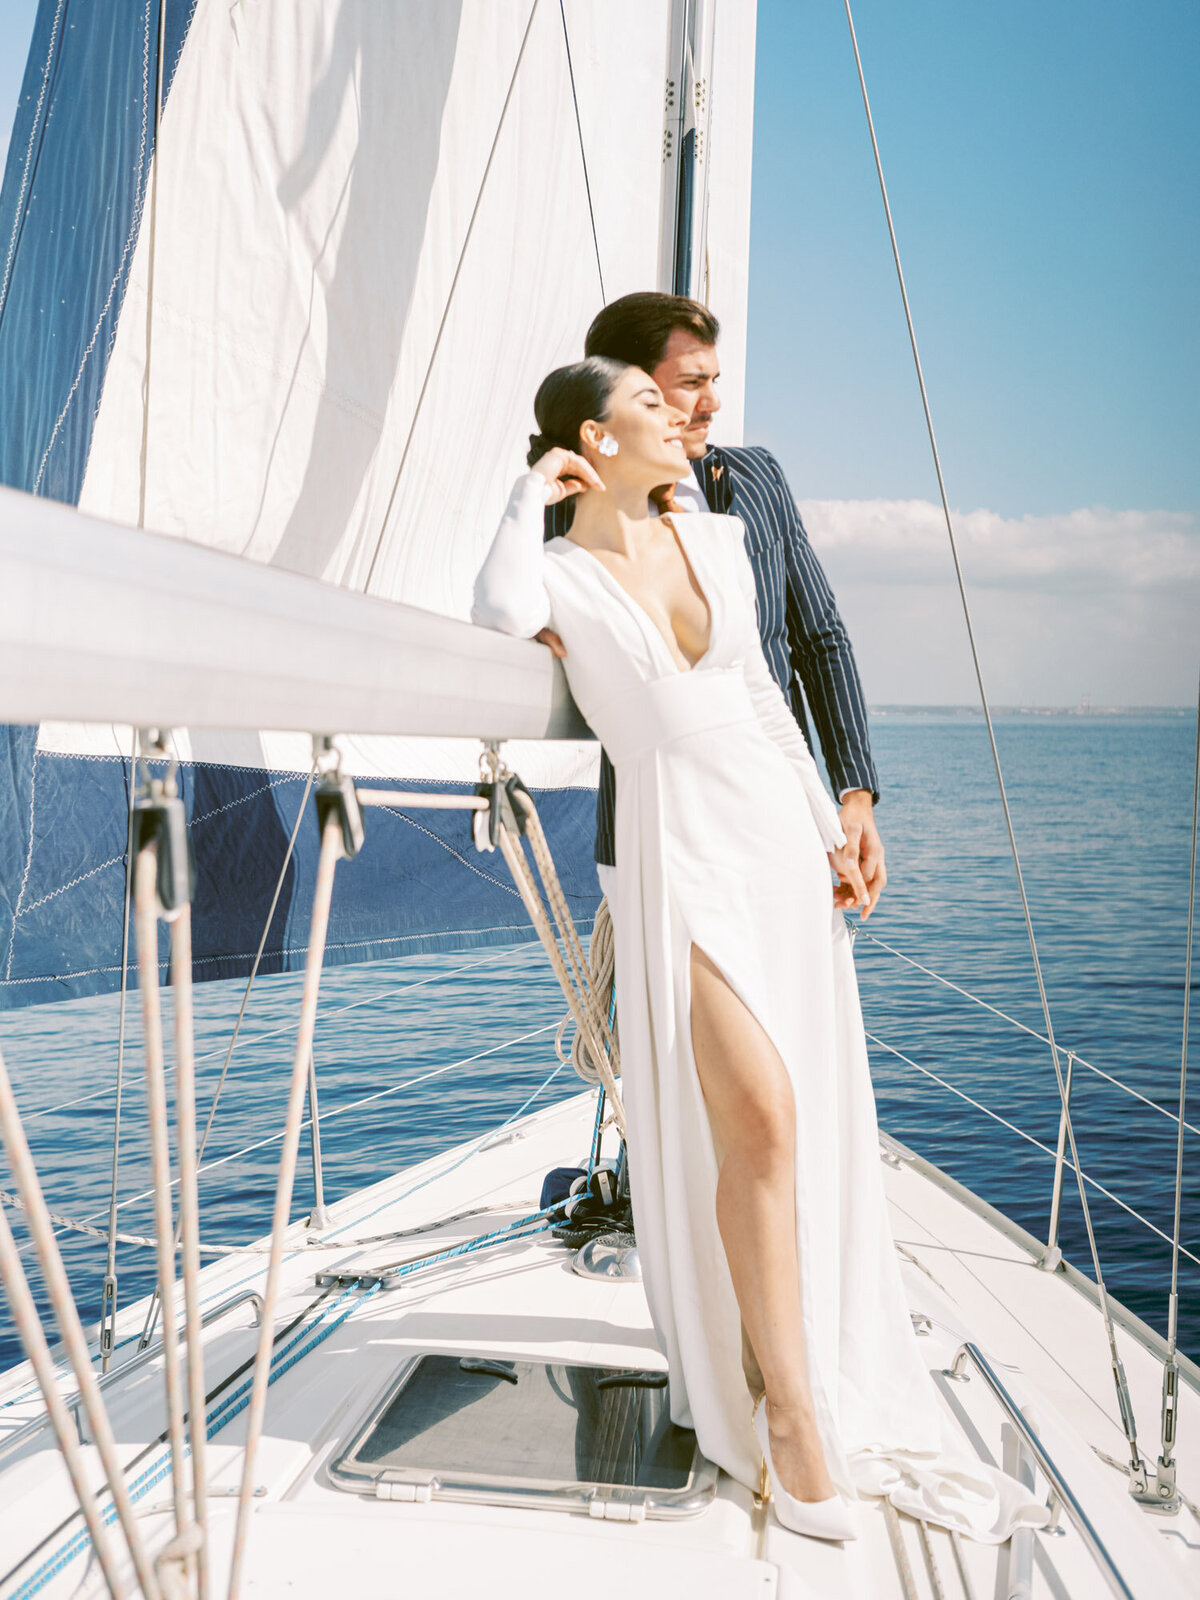 AndreasKGeorgiou-sailing-boat-wedding-17